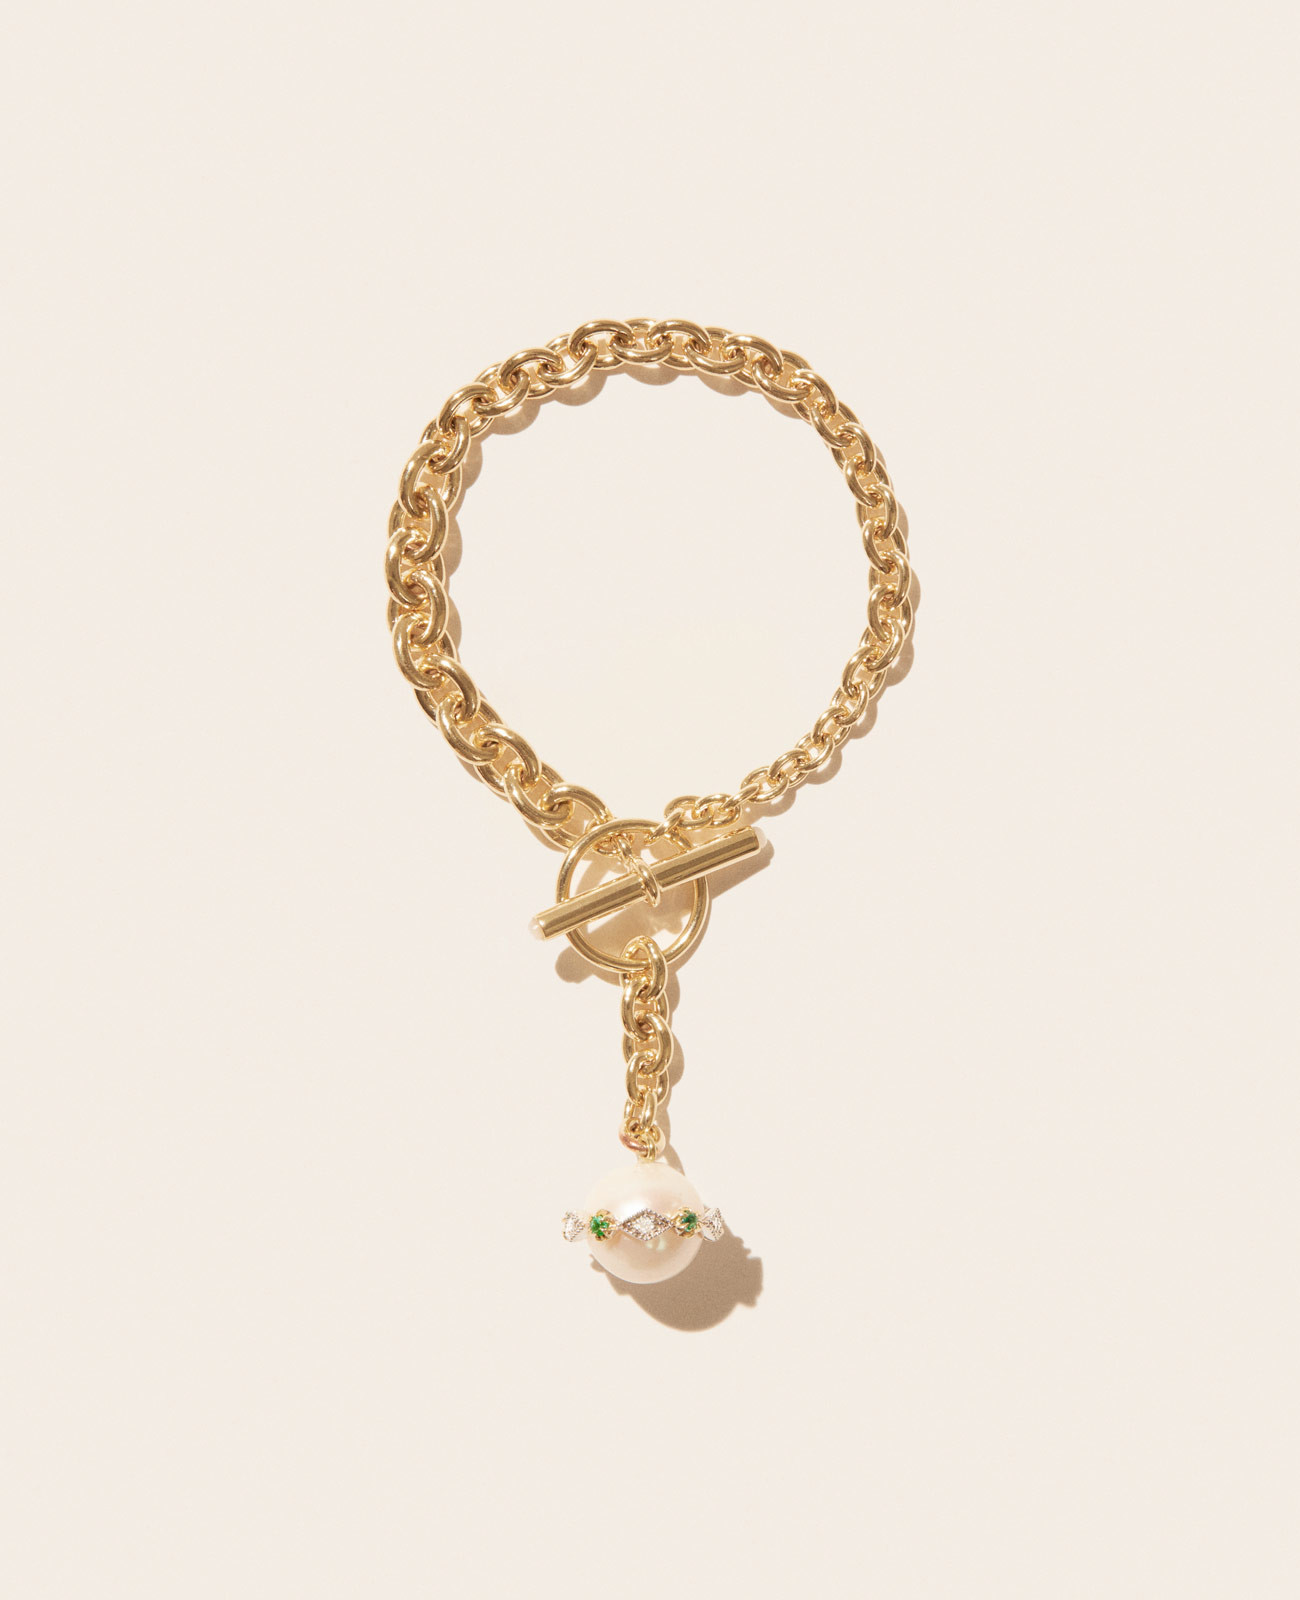 CHELSEA N°4 bracelet pascale monvoisin jewelry paris